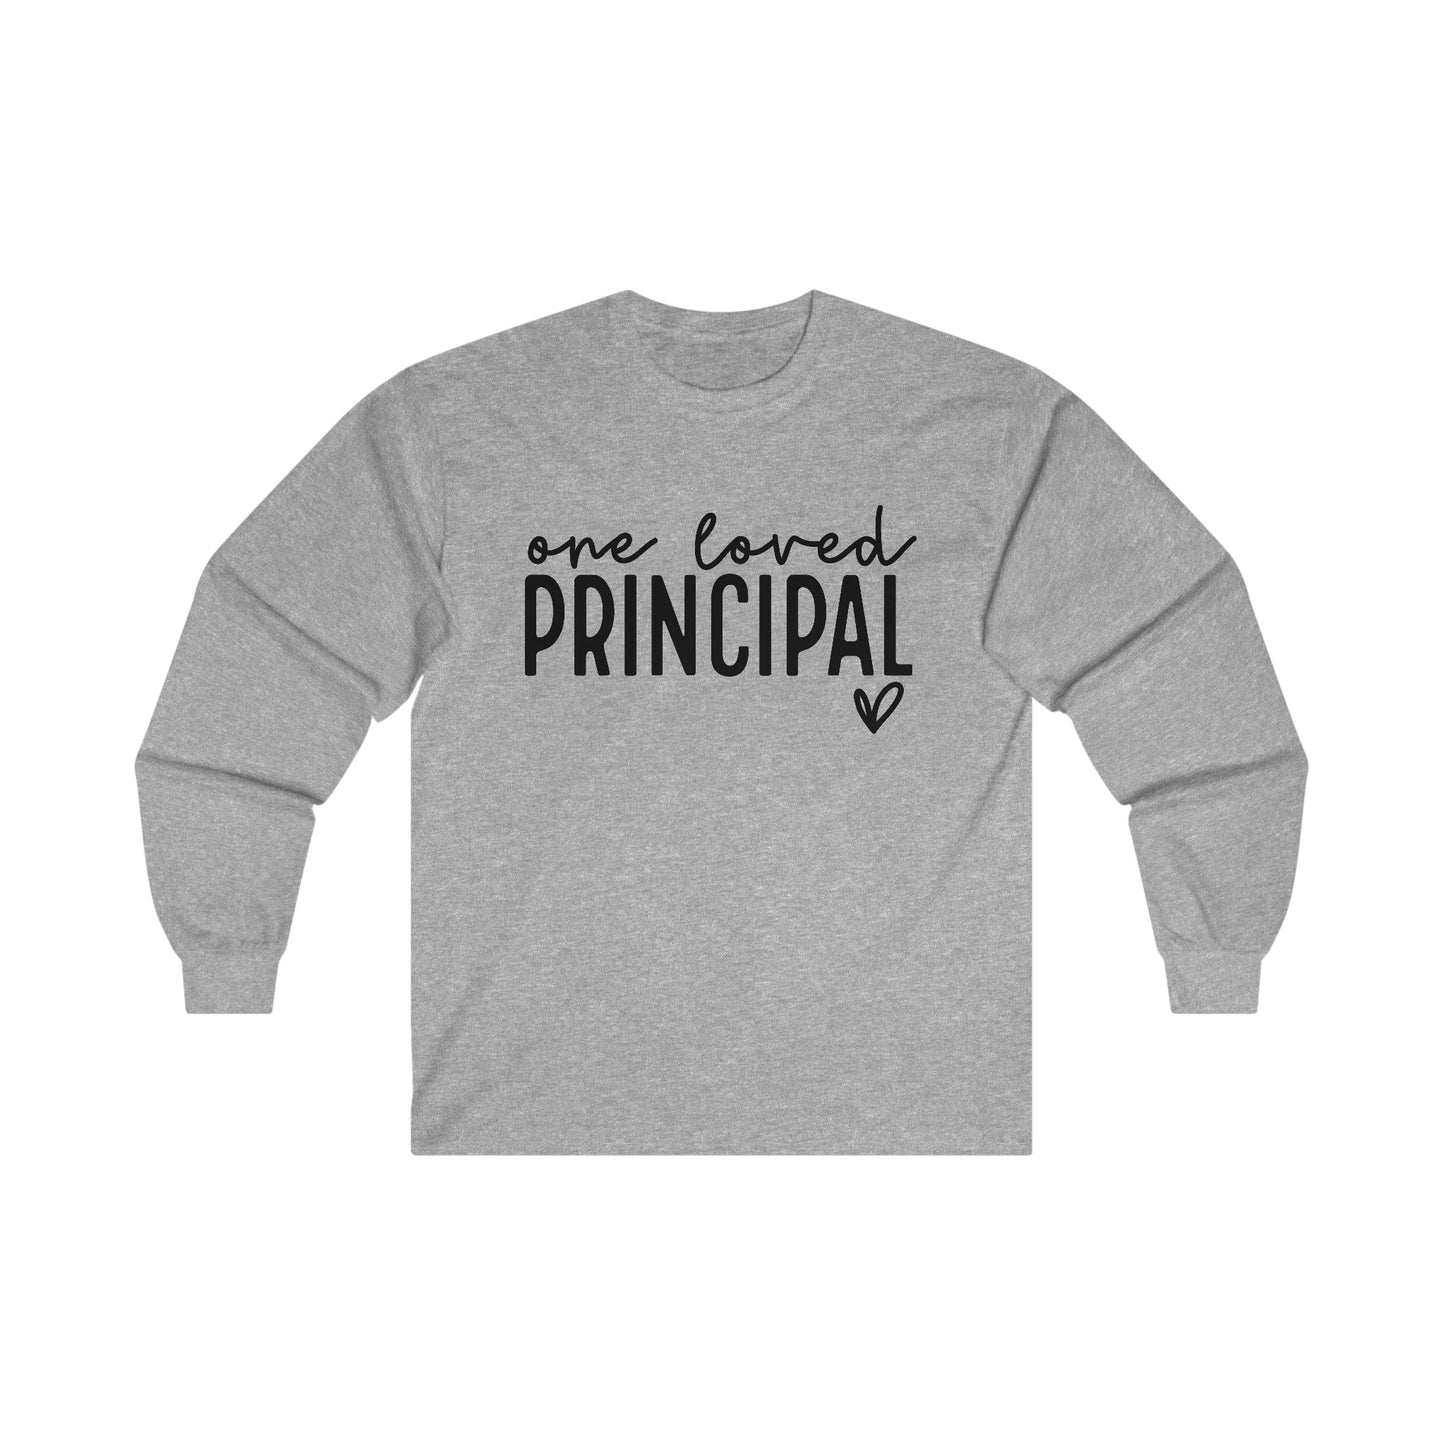 Loved Principal Long Sleeve Shirt